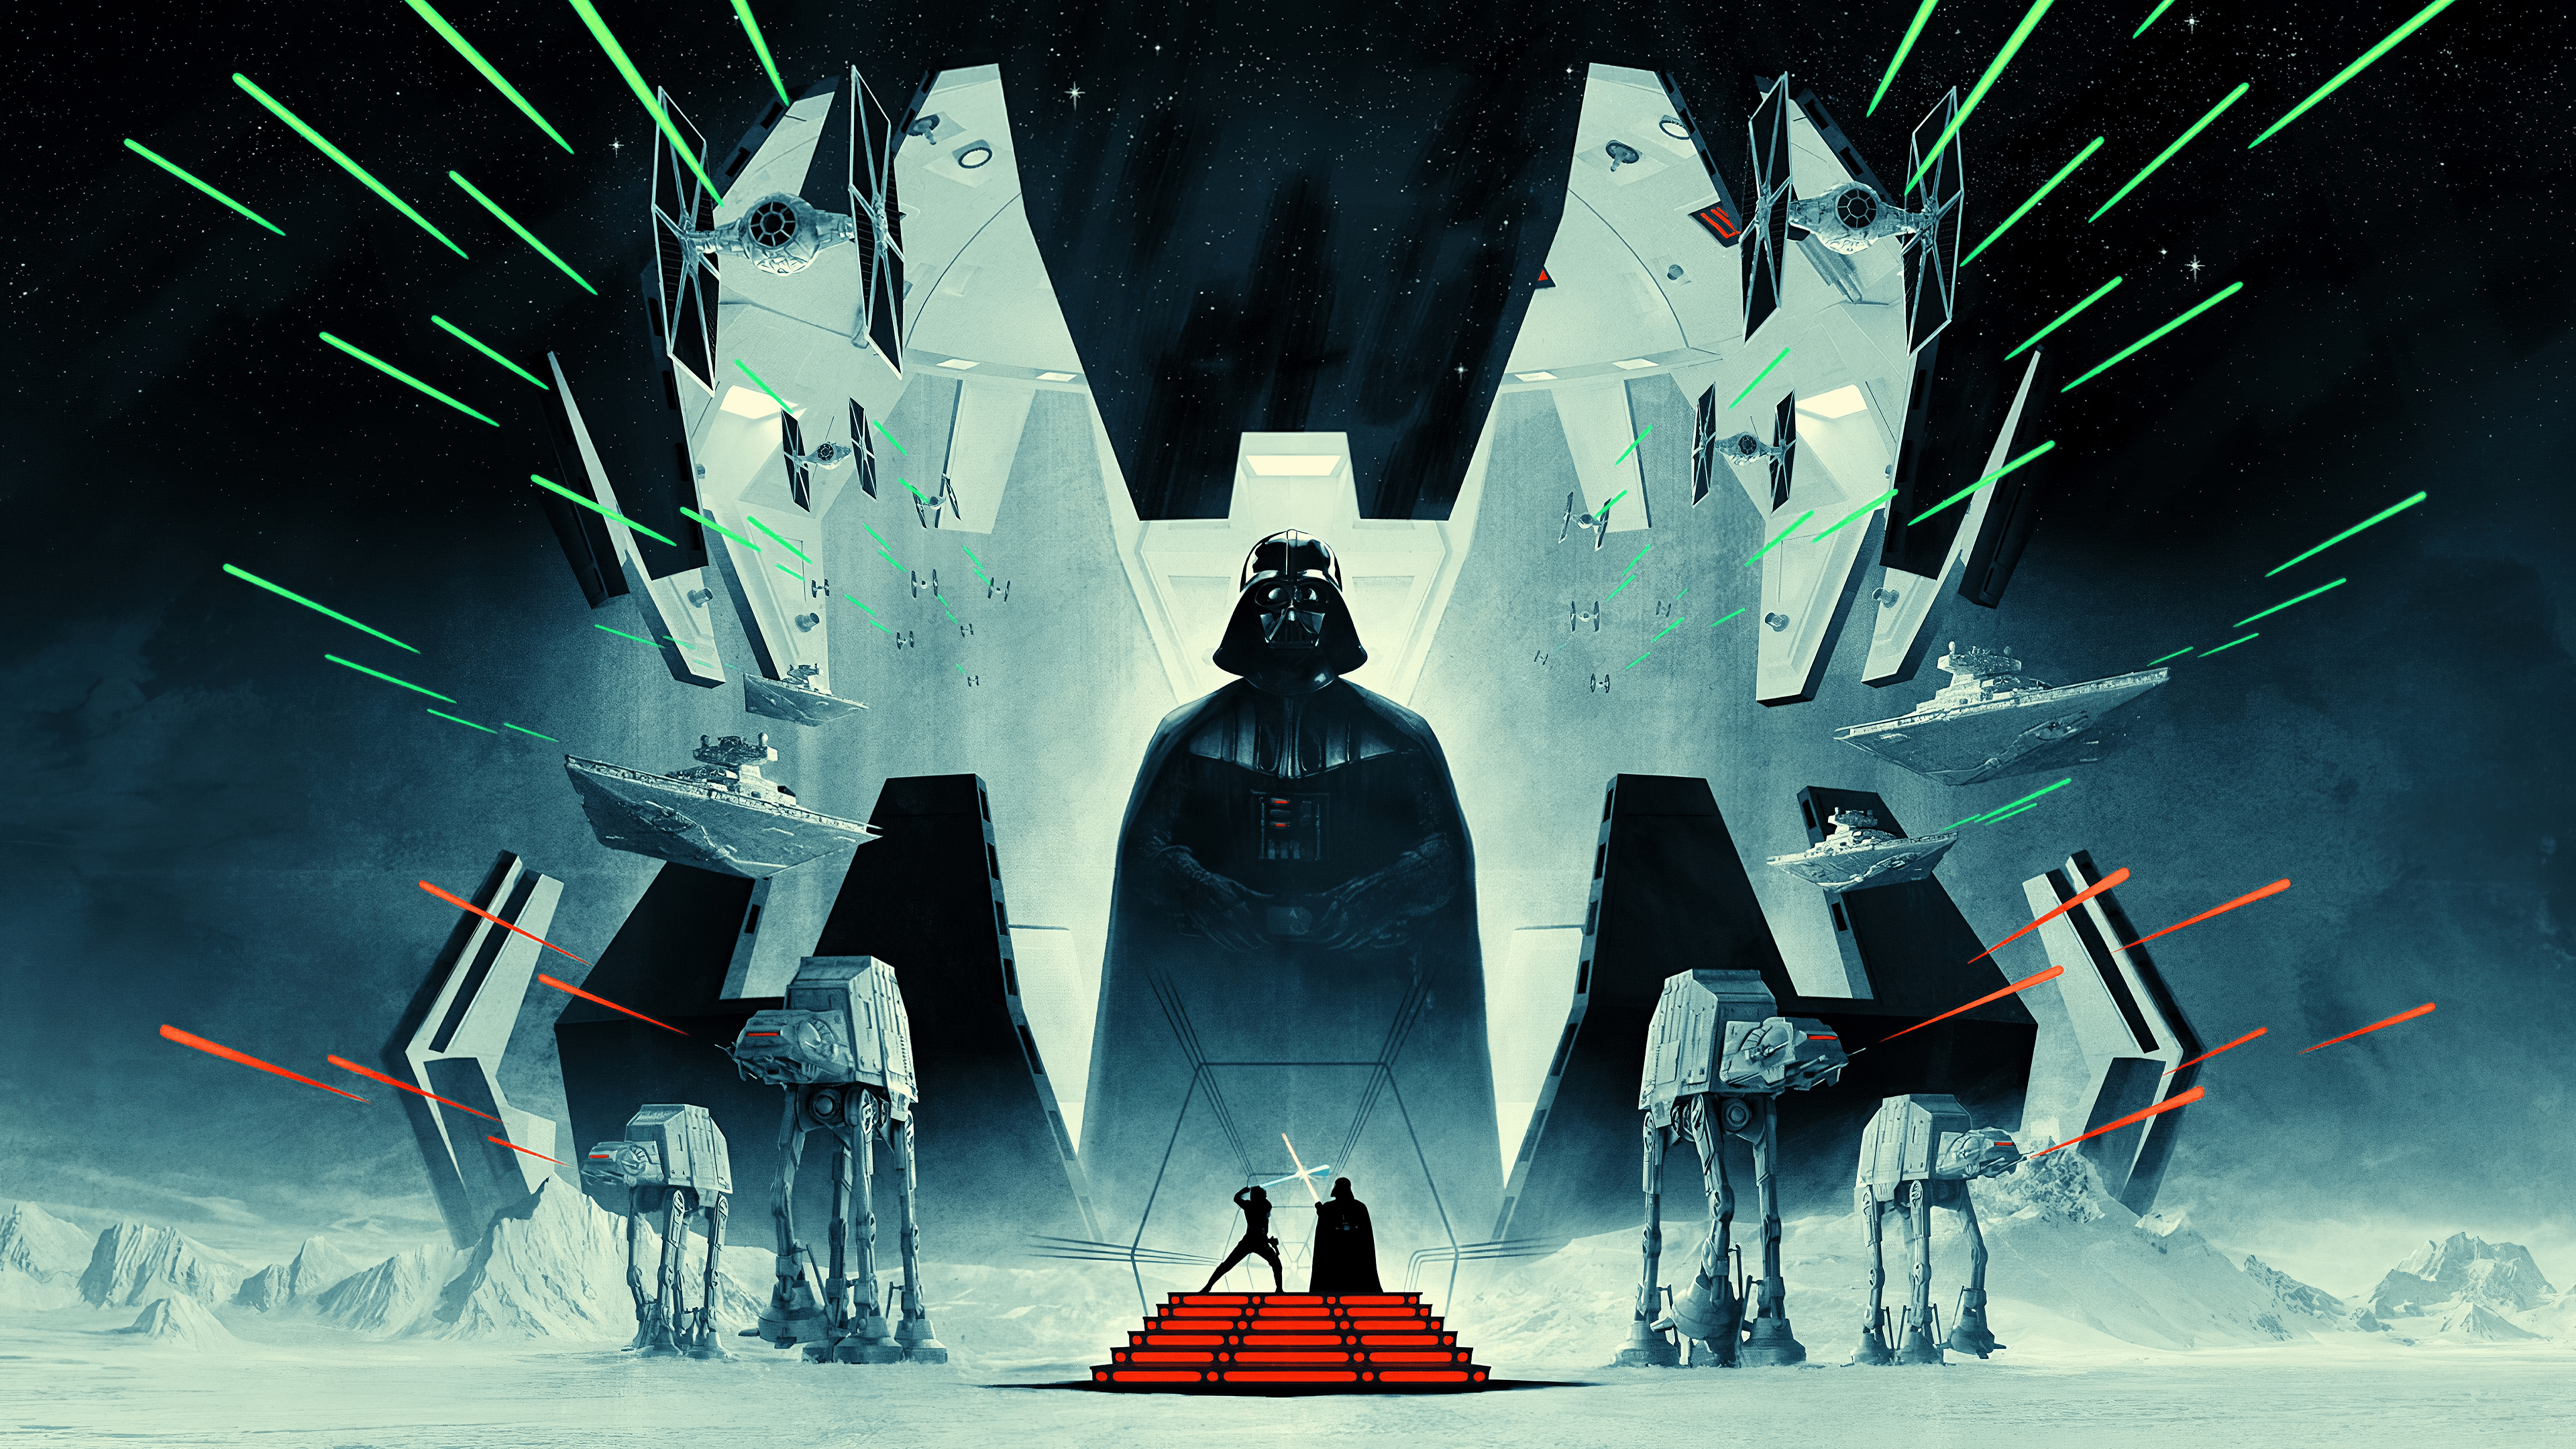 Star Wars Empire Strikes Back Wallpapers 4k.